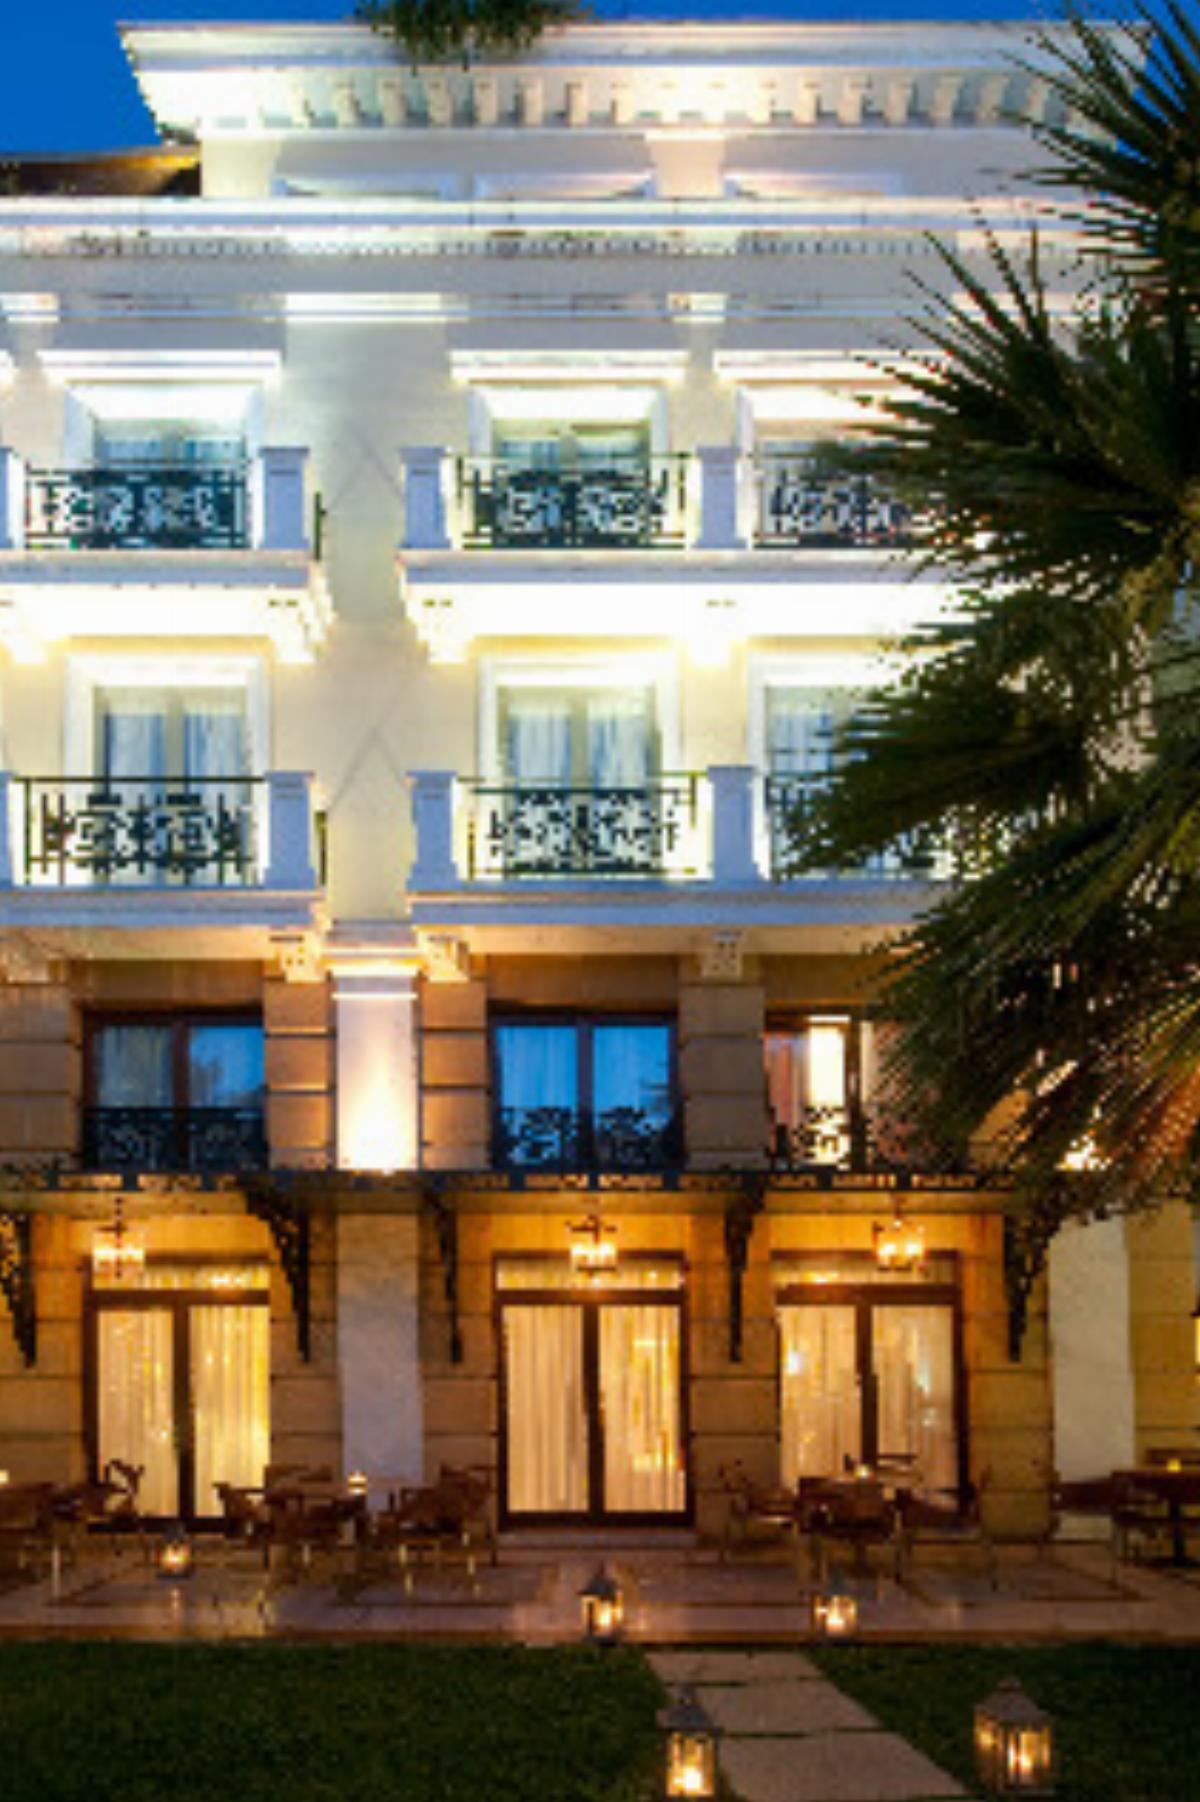 Electra Palace Athens Hotel Athens Greece